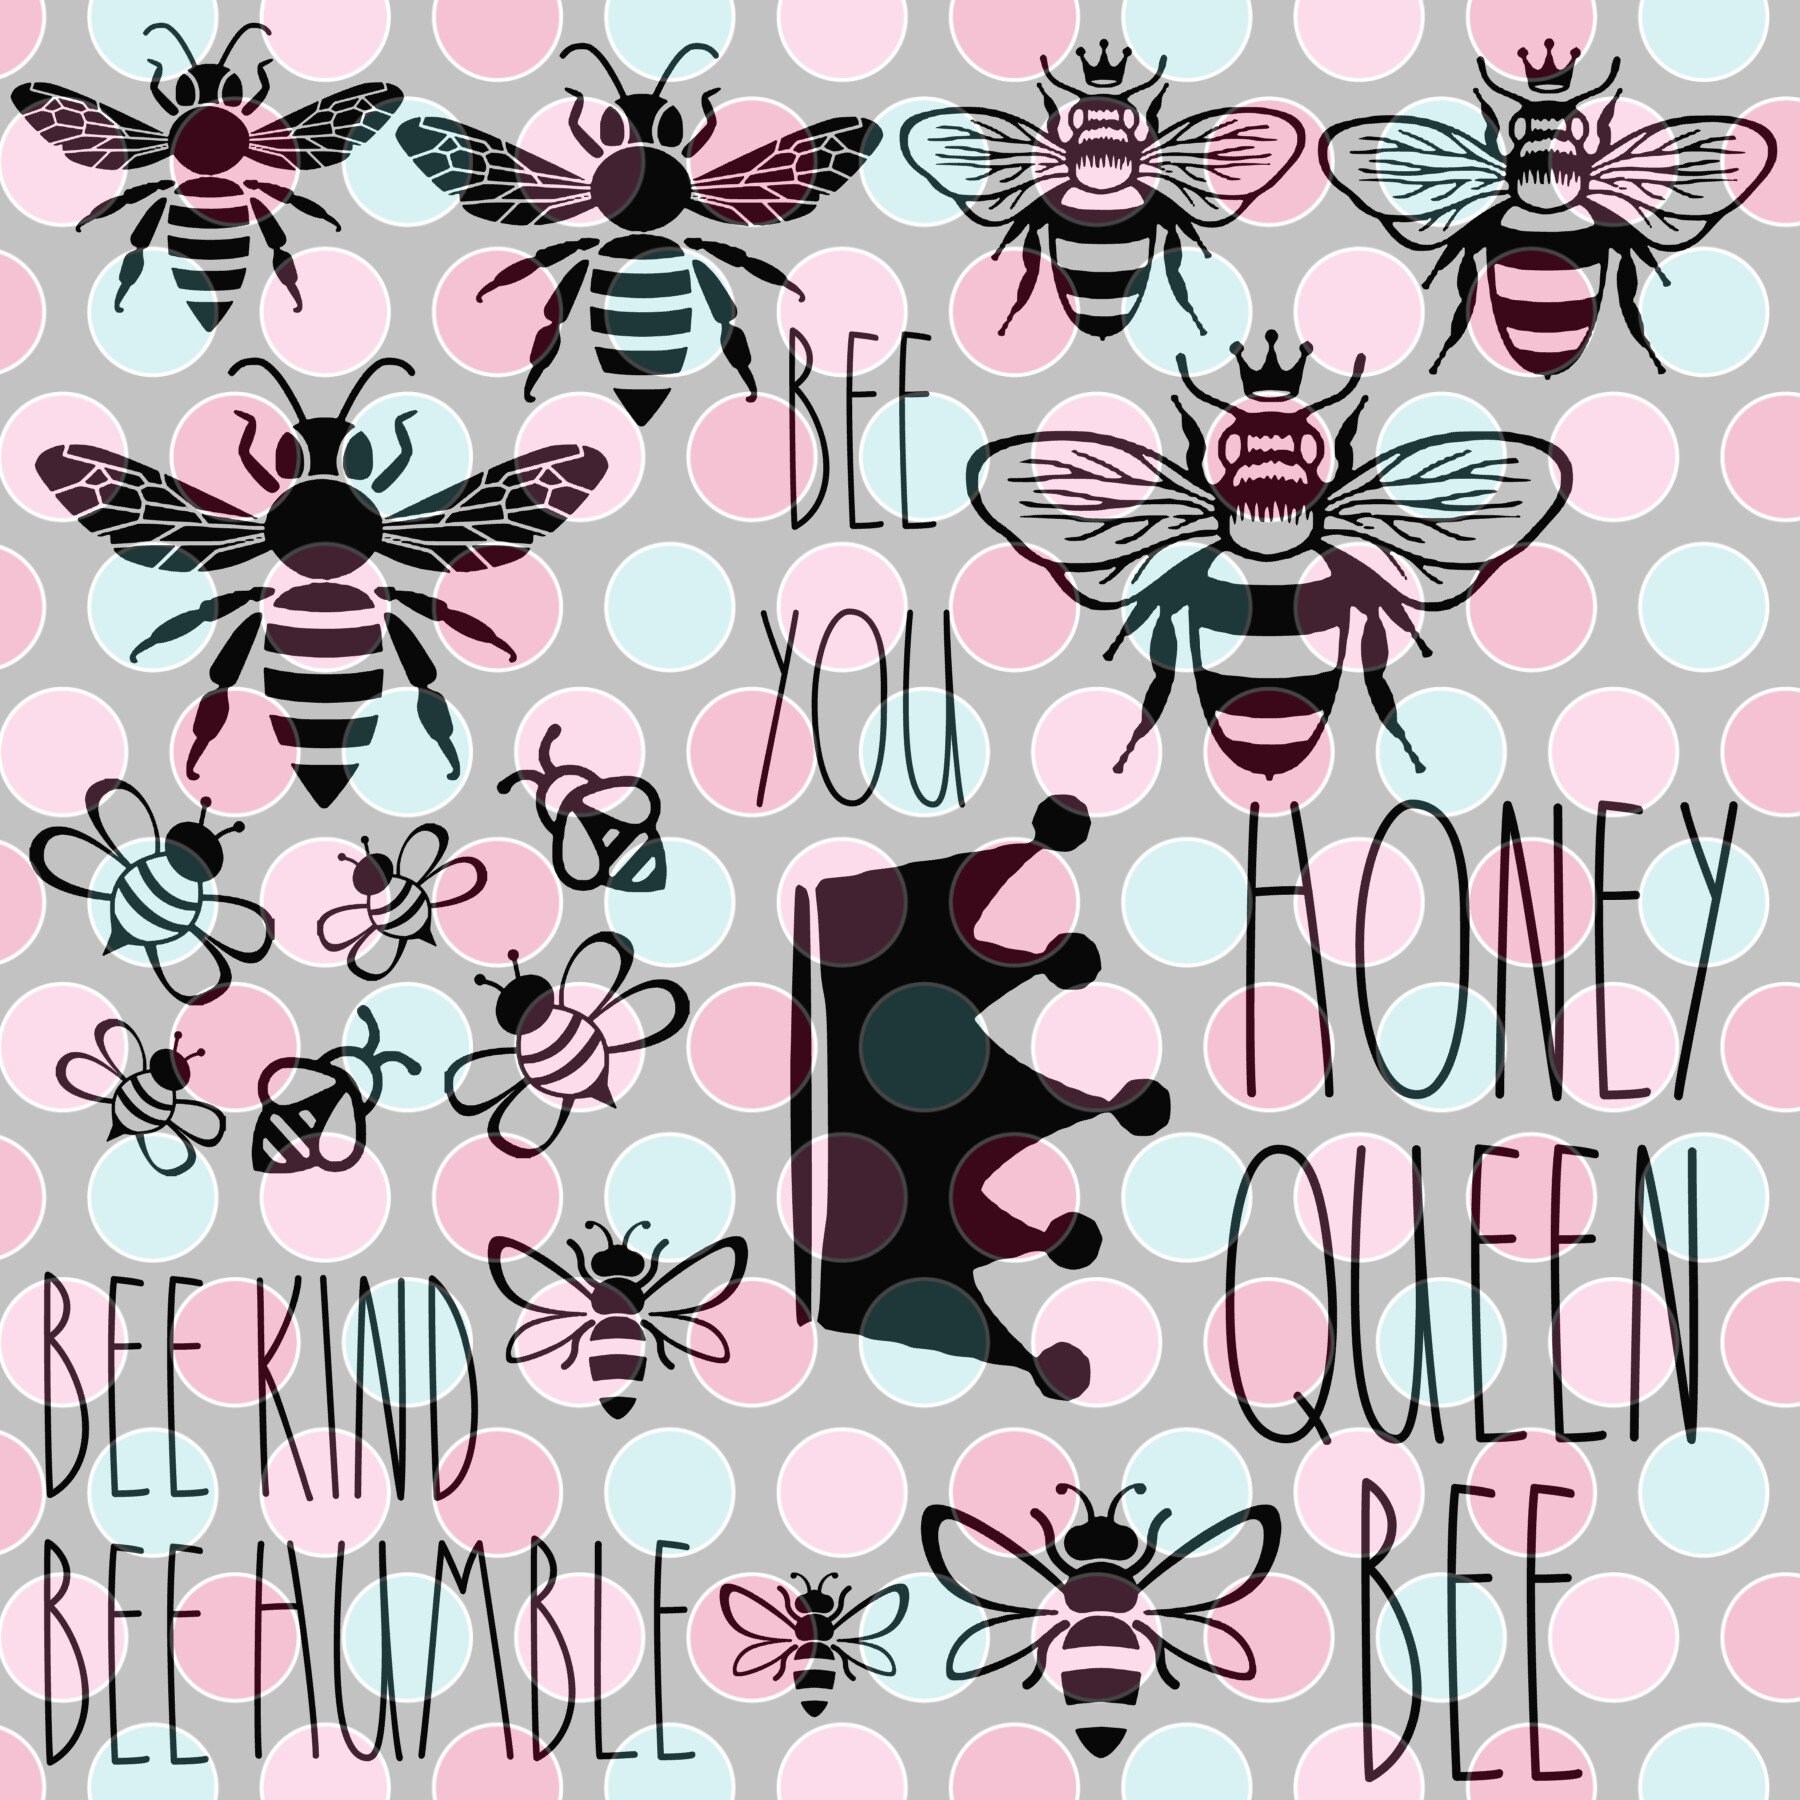 Printable Bee Decor, Set of 5, Bee Hive, Bumble Bees, Honey, Queen